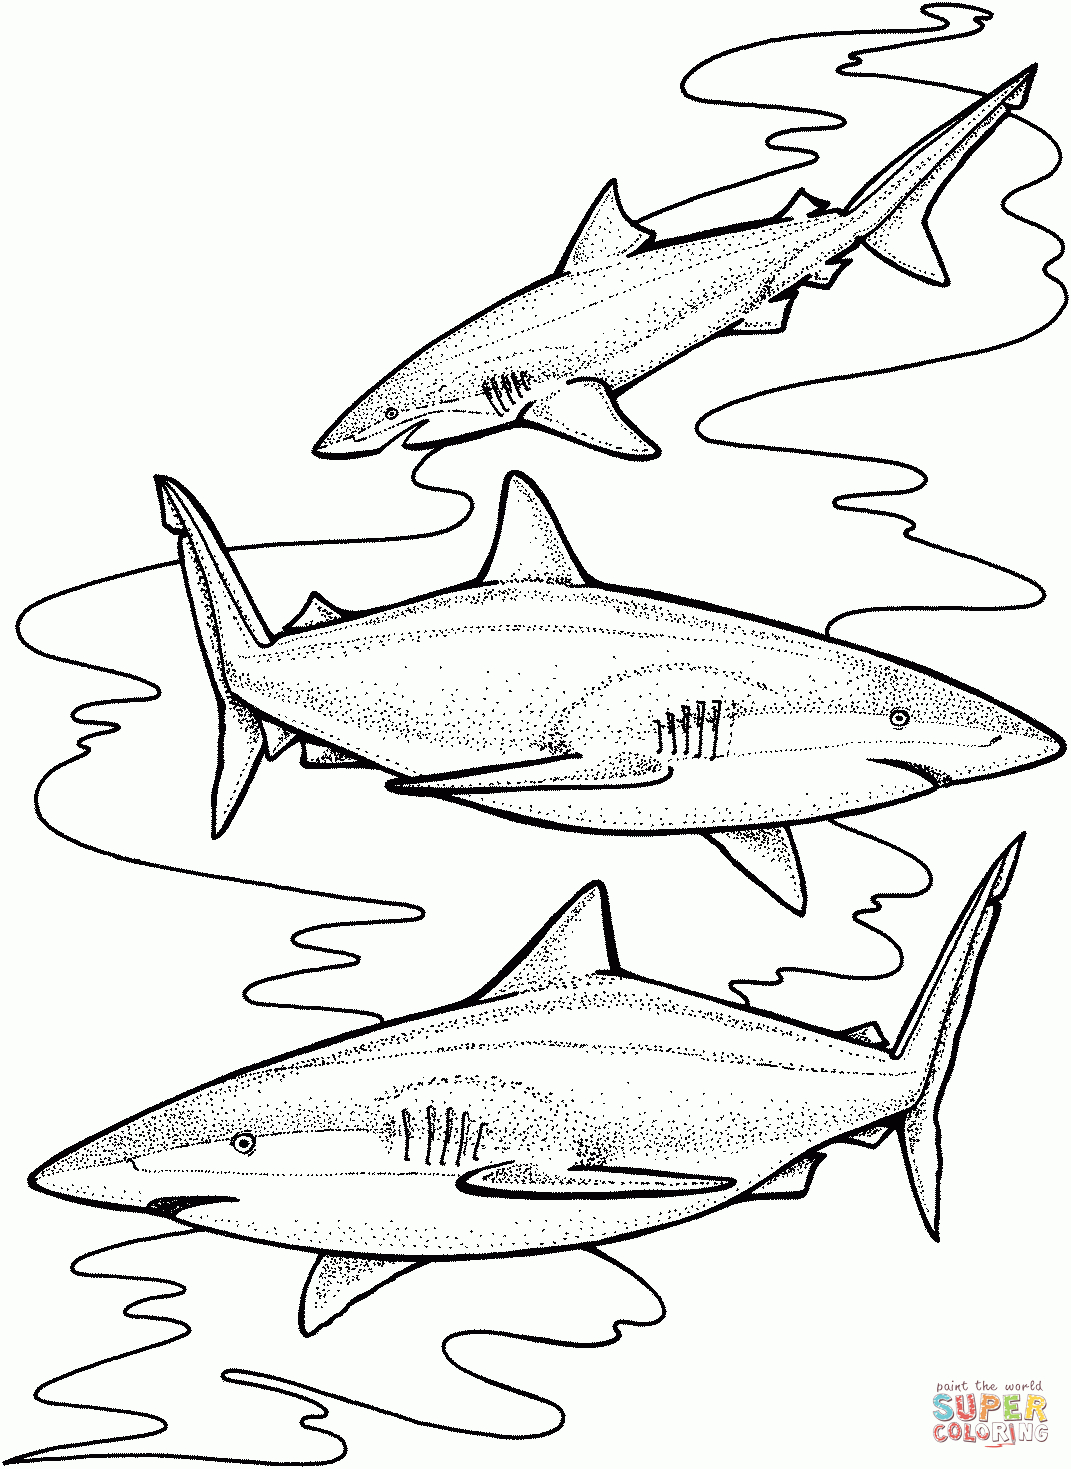 Three Tiger Sharks Coloring Page | Free Printable Coloring Pages - Free Printable Shark Coloring Pages